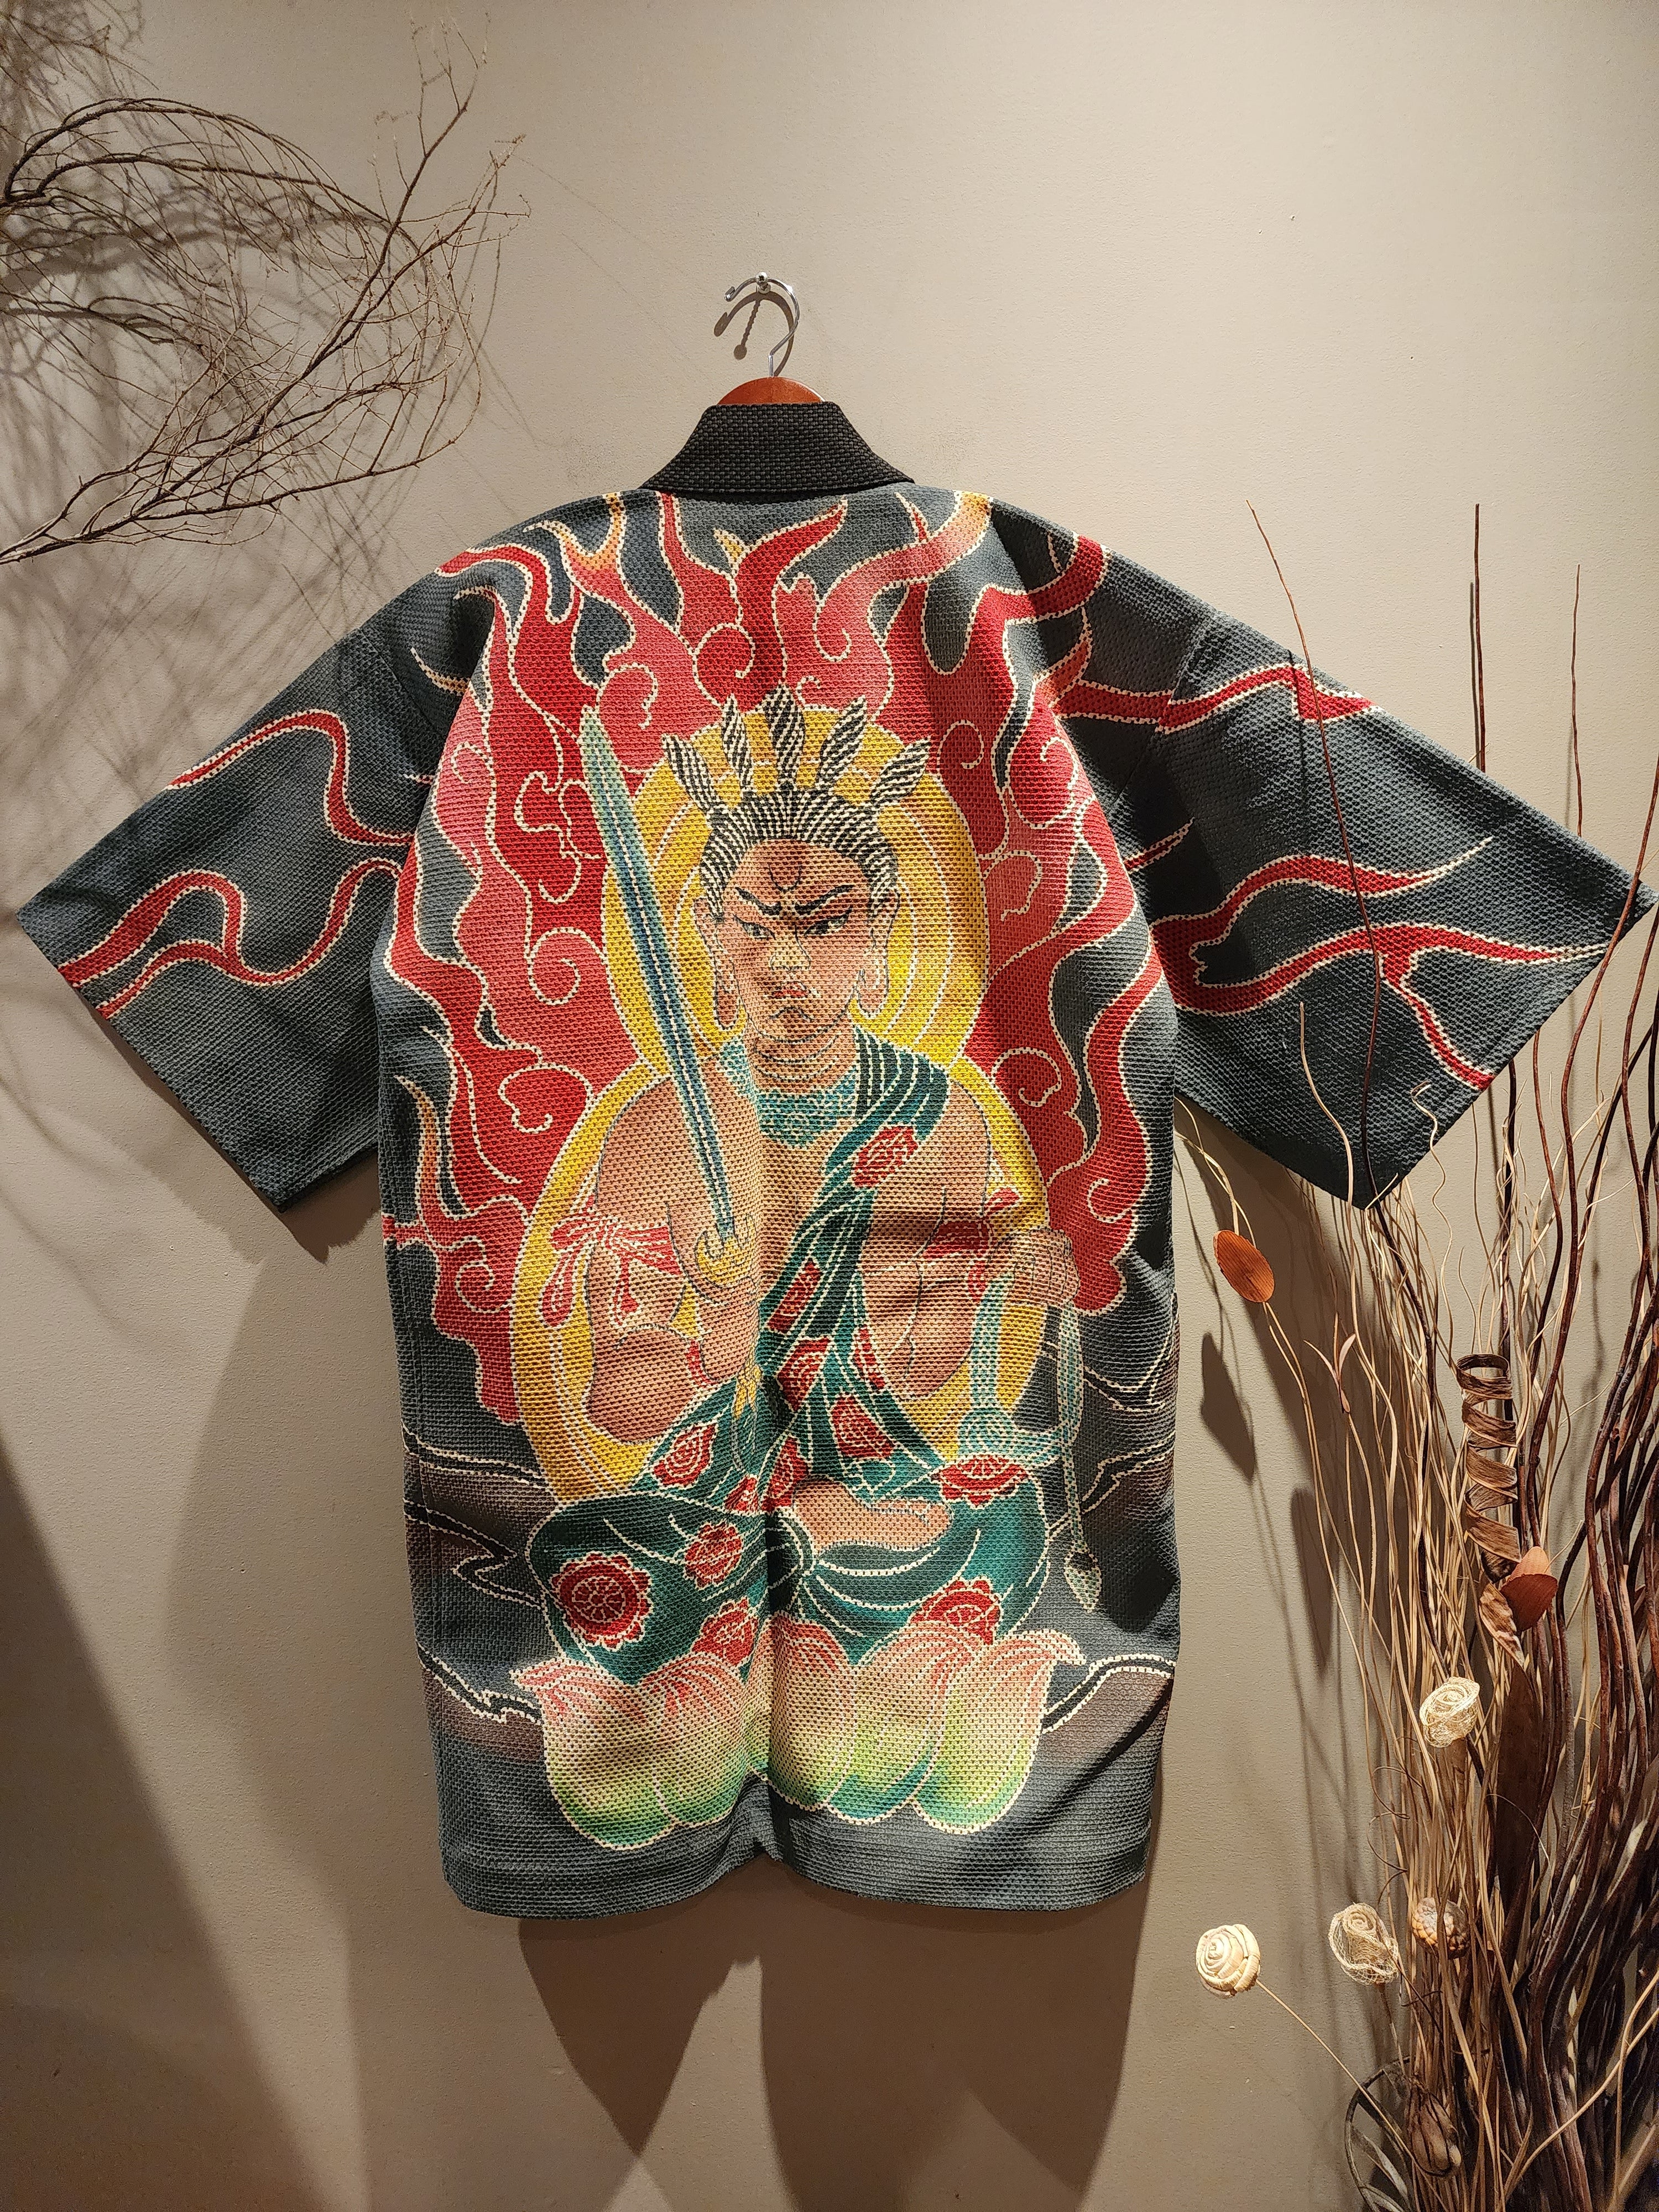 Japanese Fireman's Jacket Tagged 